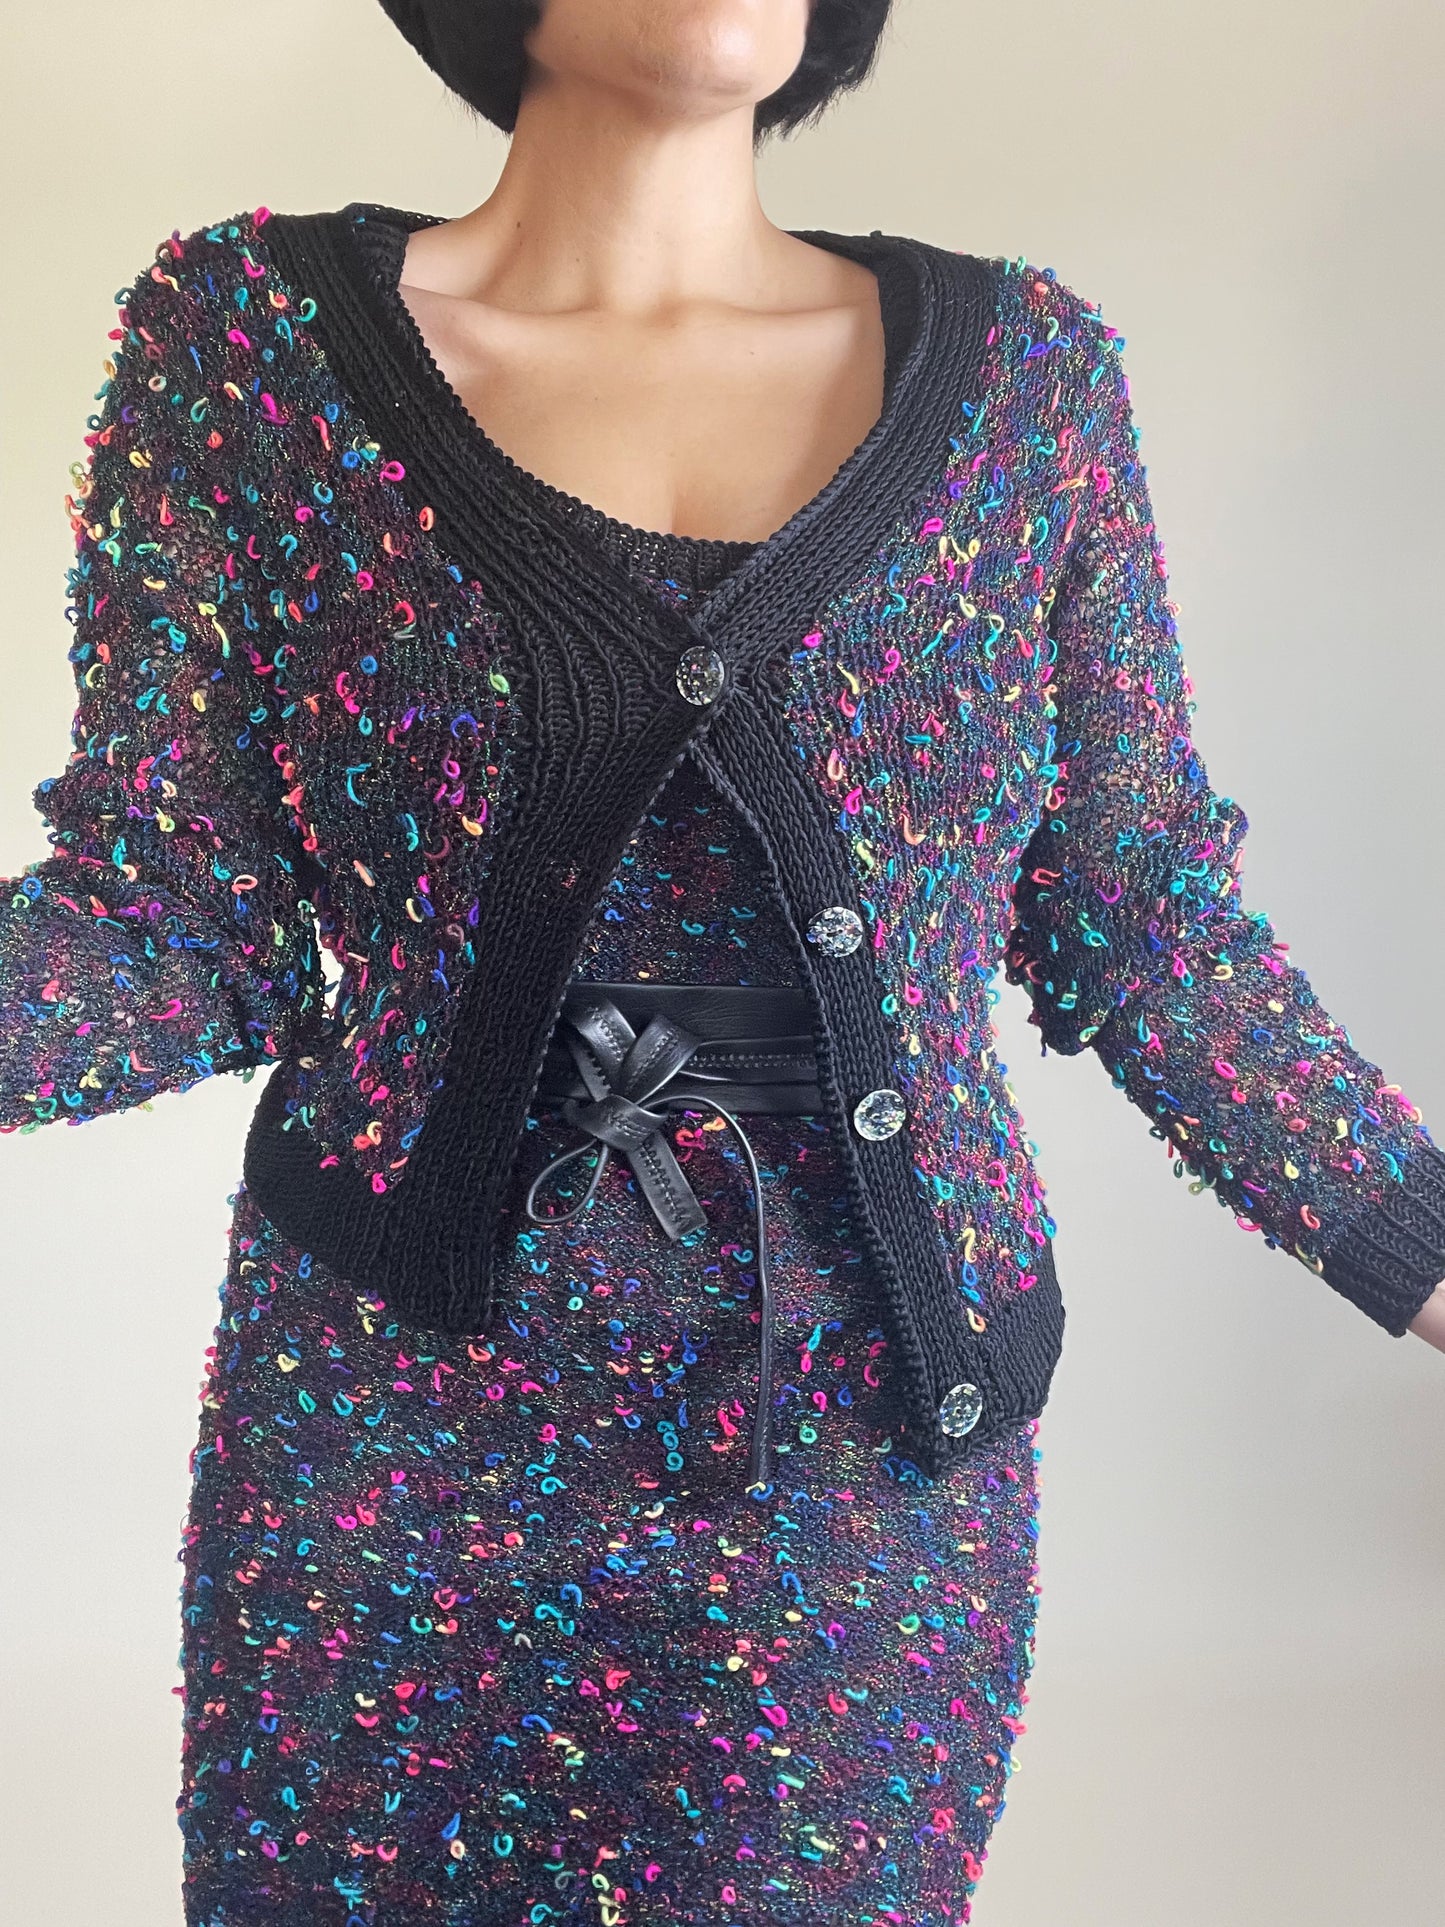 Vintage 80s Rainbow Yarn Knit Dress Sweater Set Fits Sizes XS-M